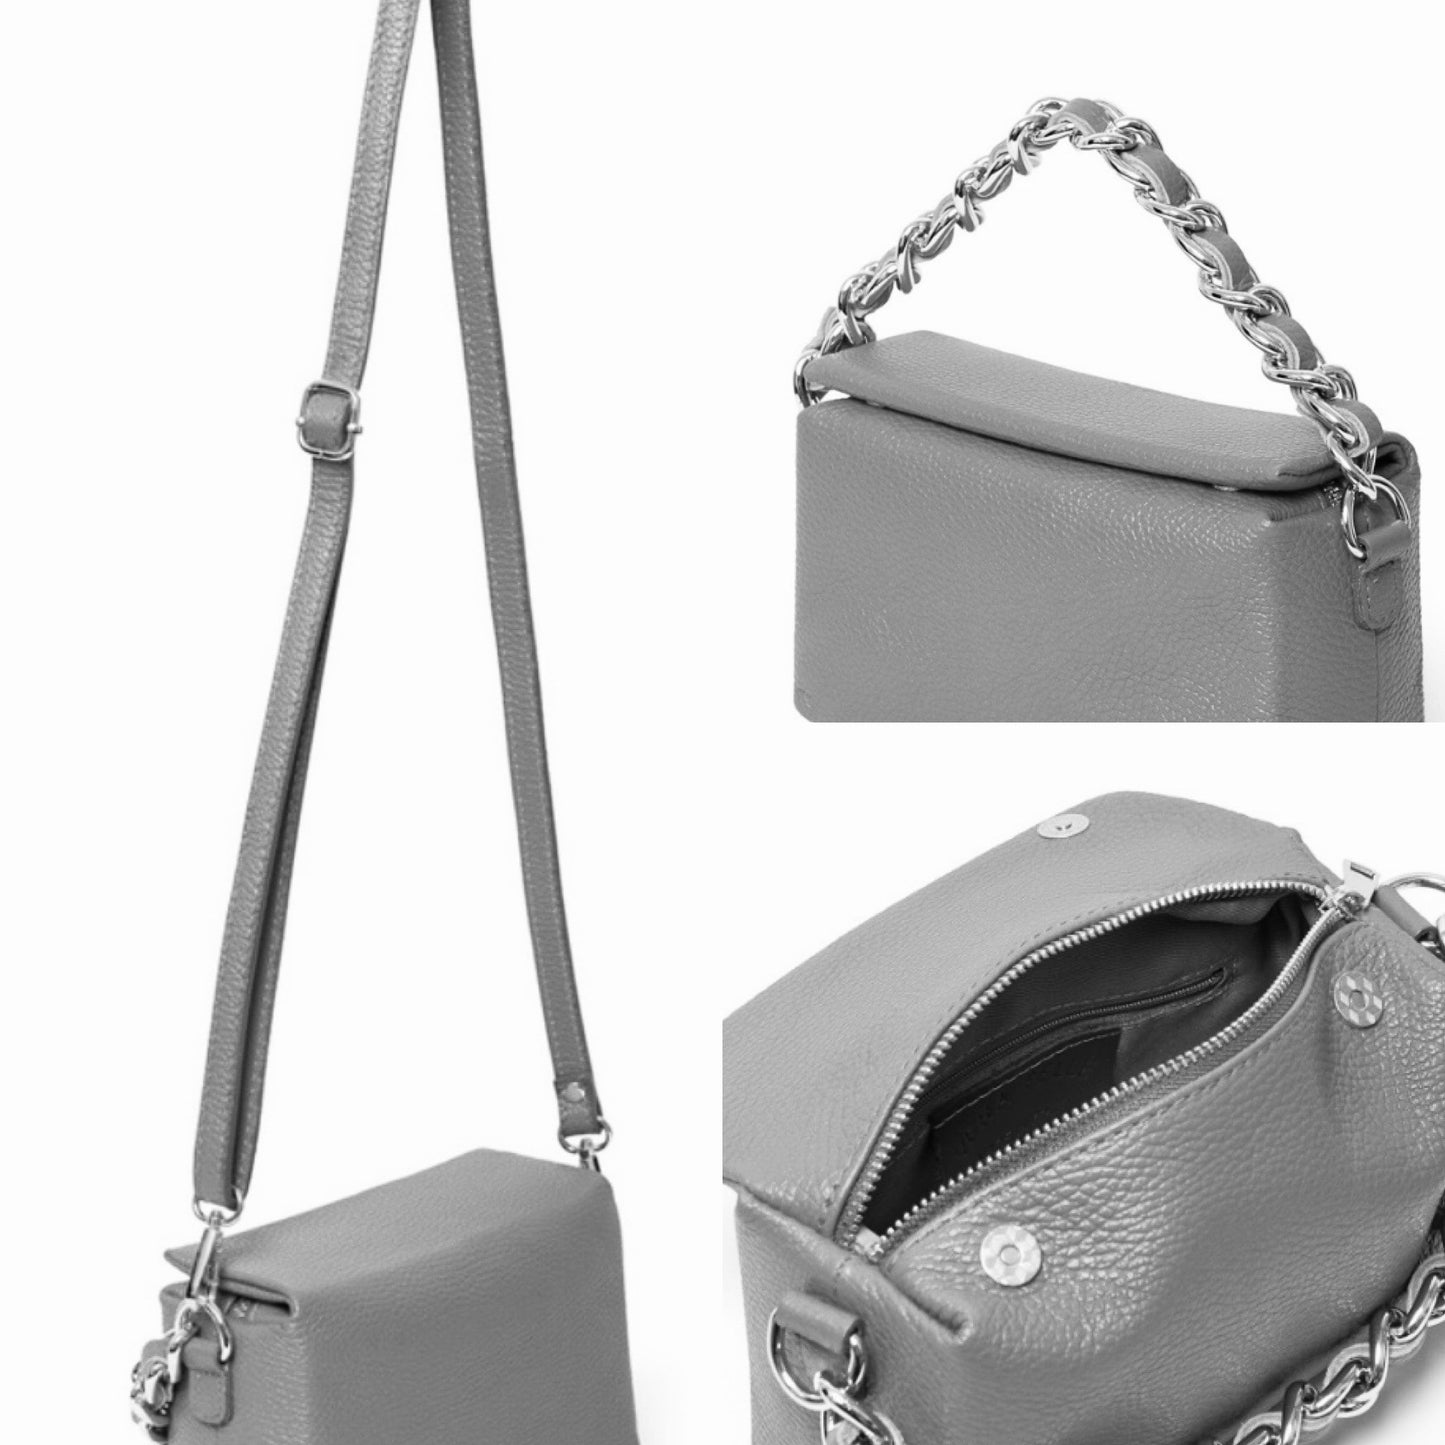 Cream Boxy Bag With Chain Handle - Erin